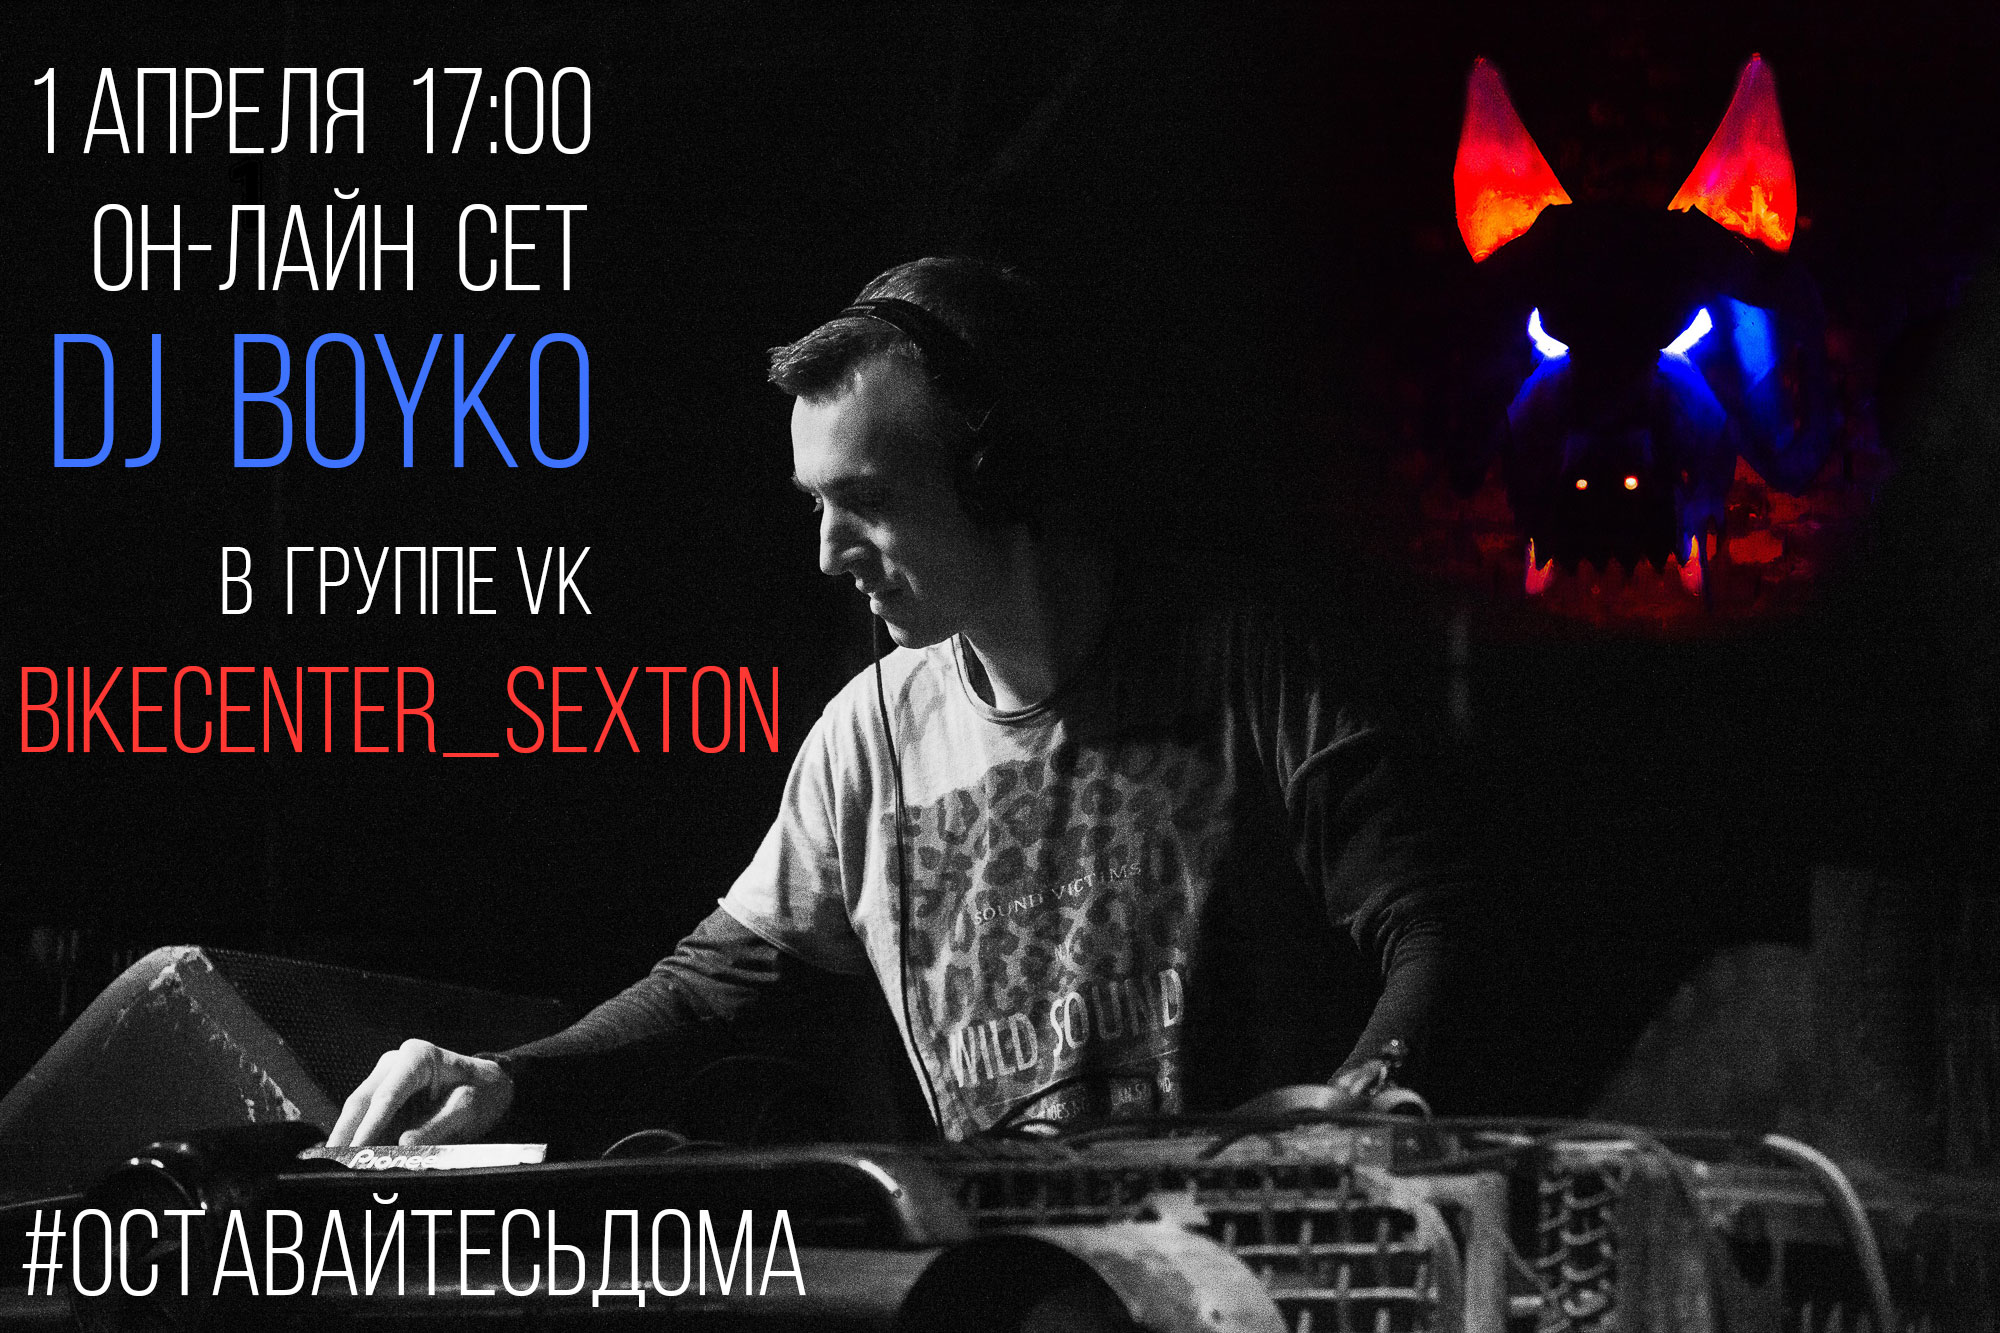 DJ BOYKO - Sexton Байк Центр, 2020-04-01 Он-лайн DJ Микс для подписчиков